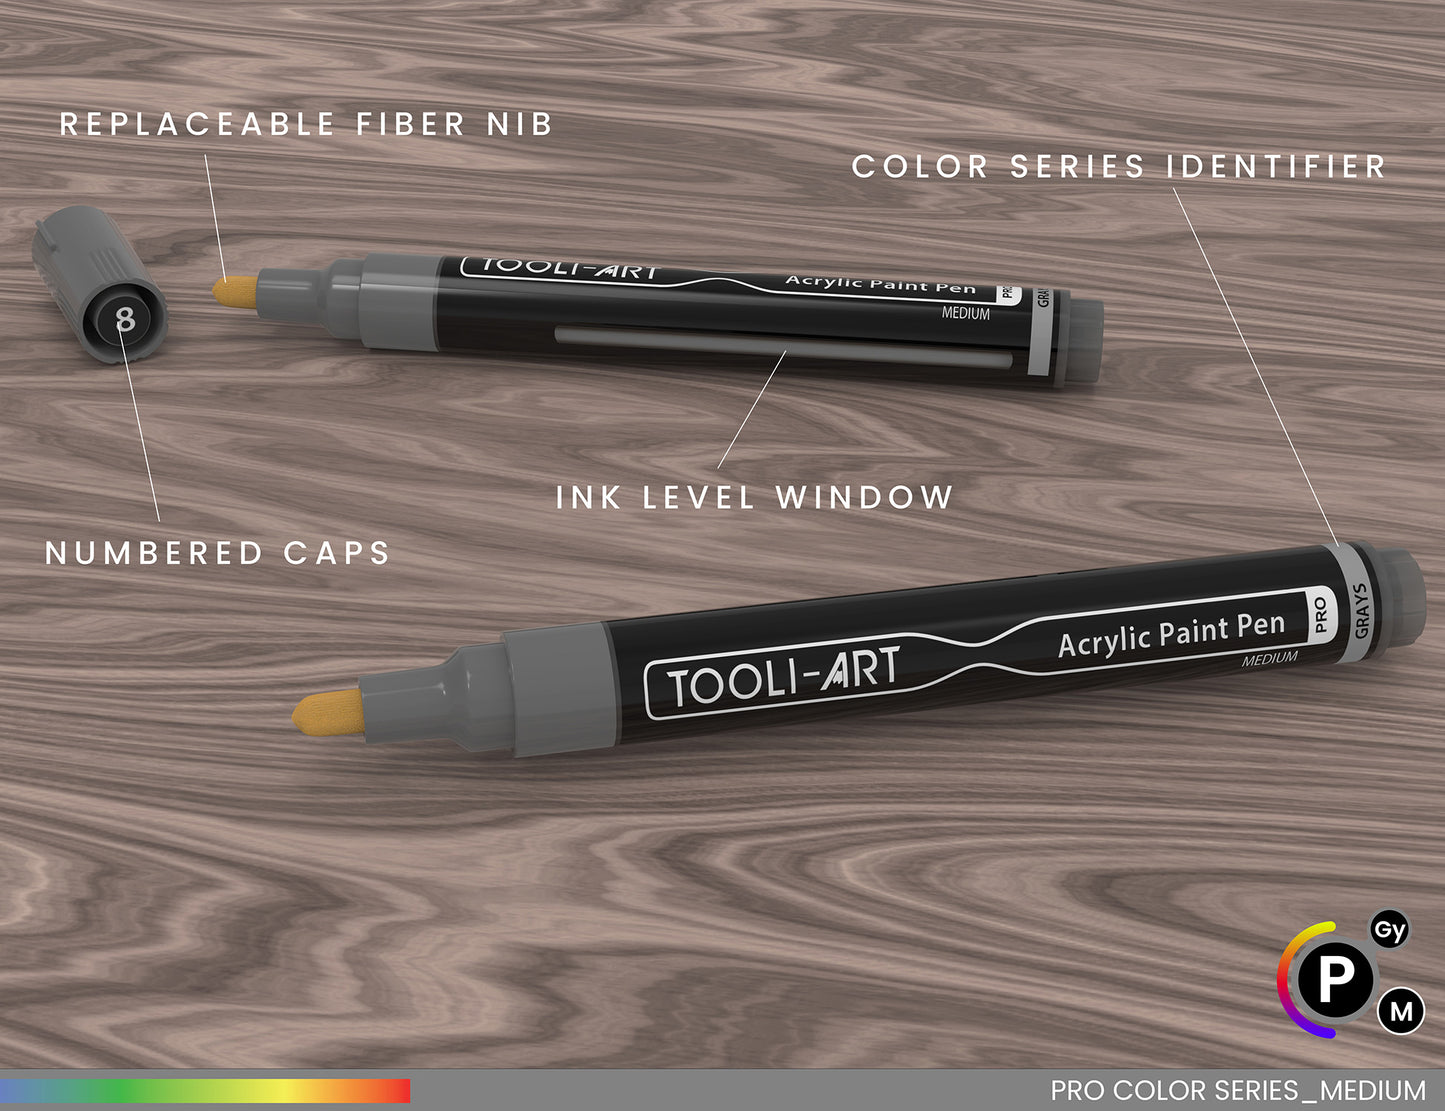 22 Acrylic Paint Pens (GRAYS) Pro Color Series Set (3mm MEDIUM)